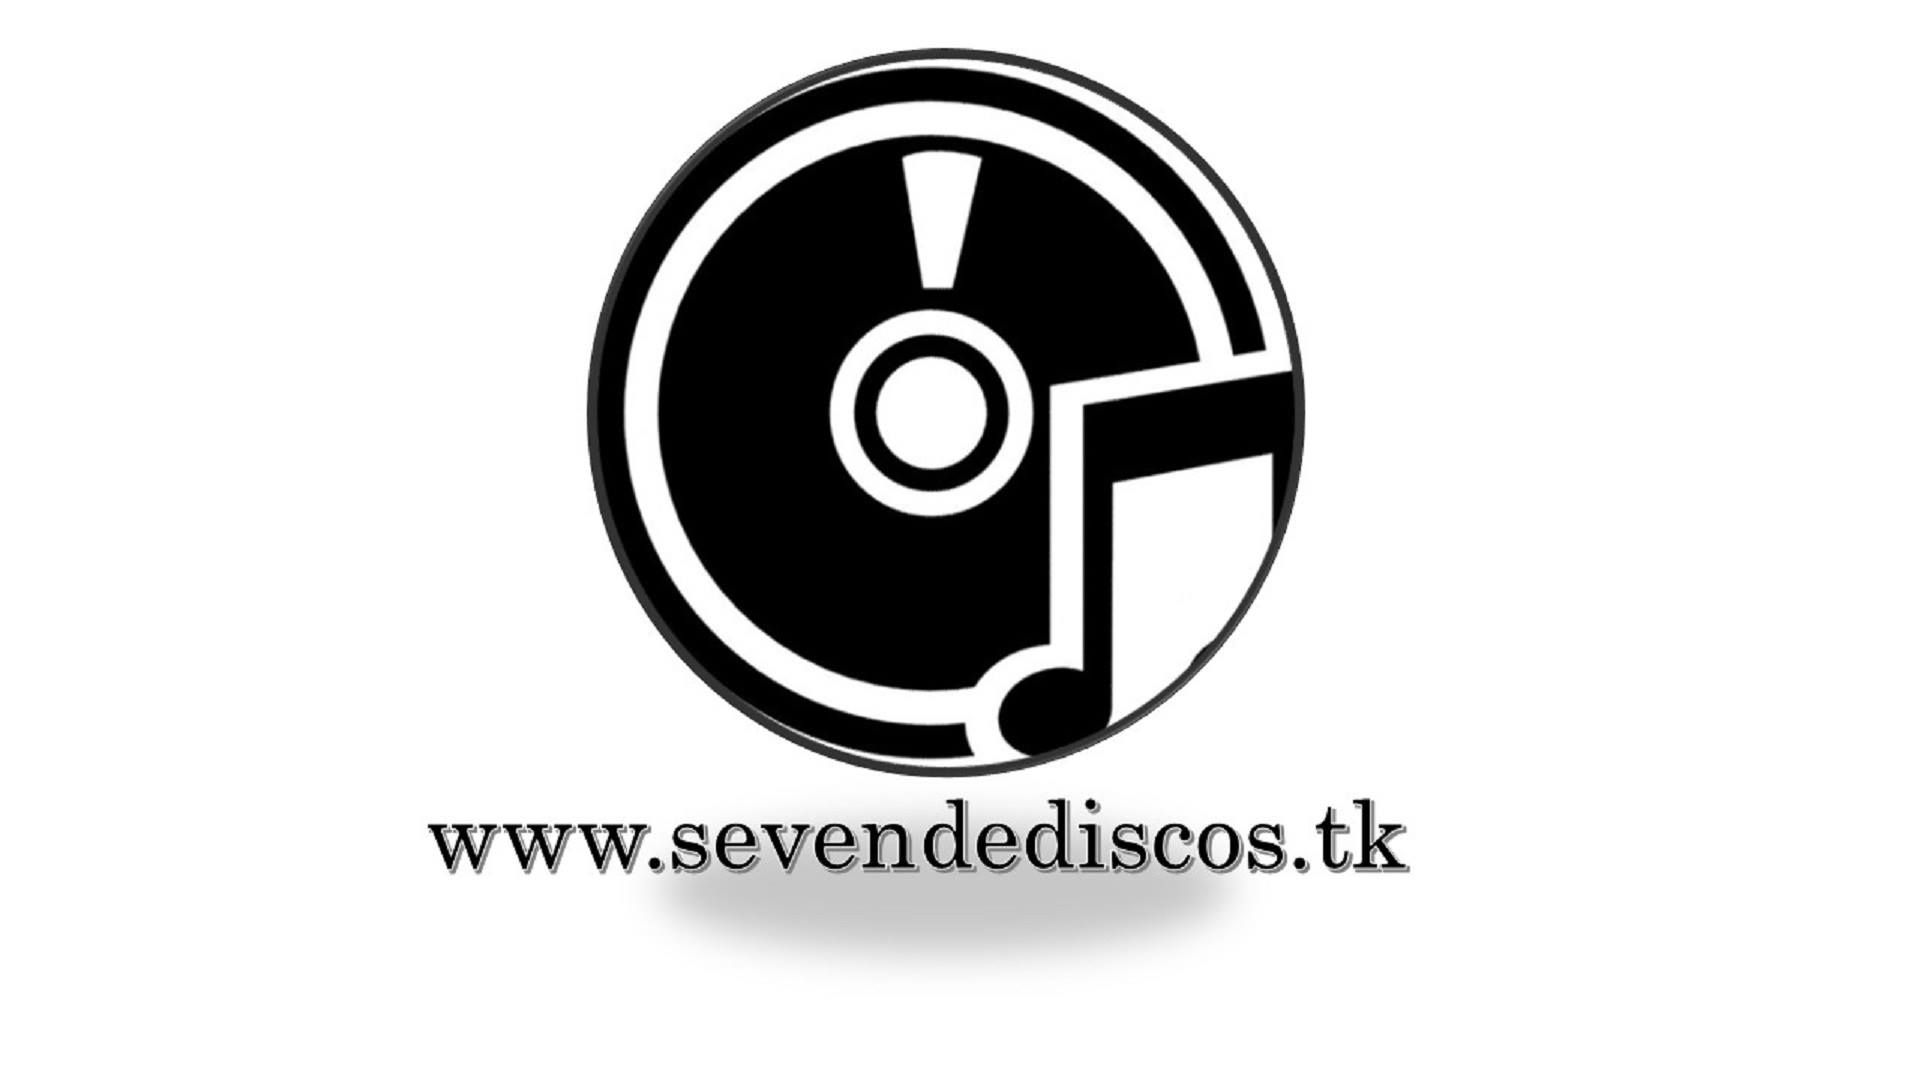 Venta de discos ONLINE en discogs thumbnail